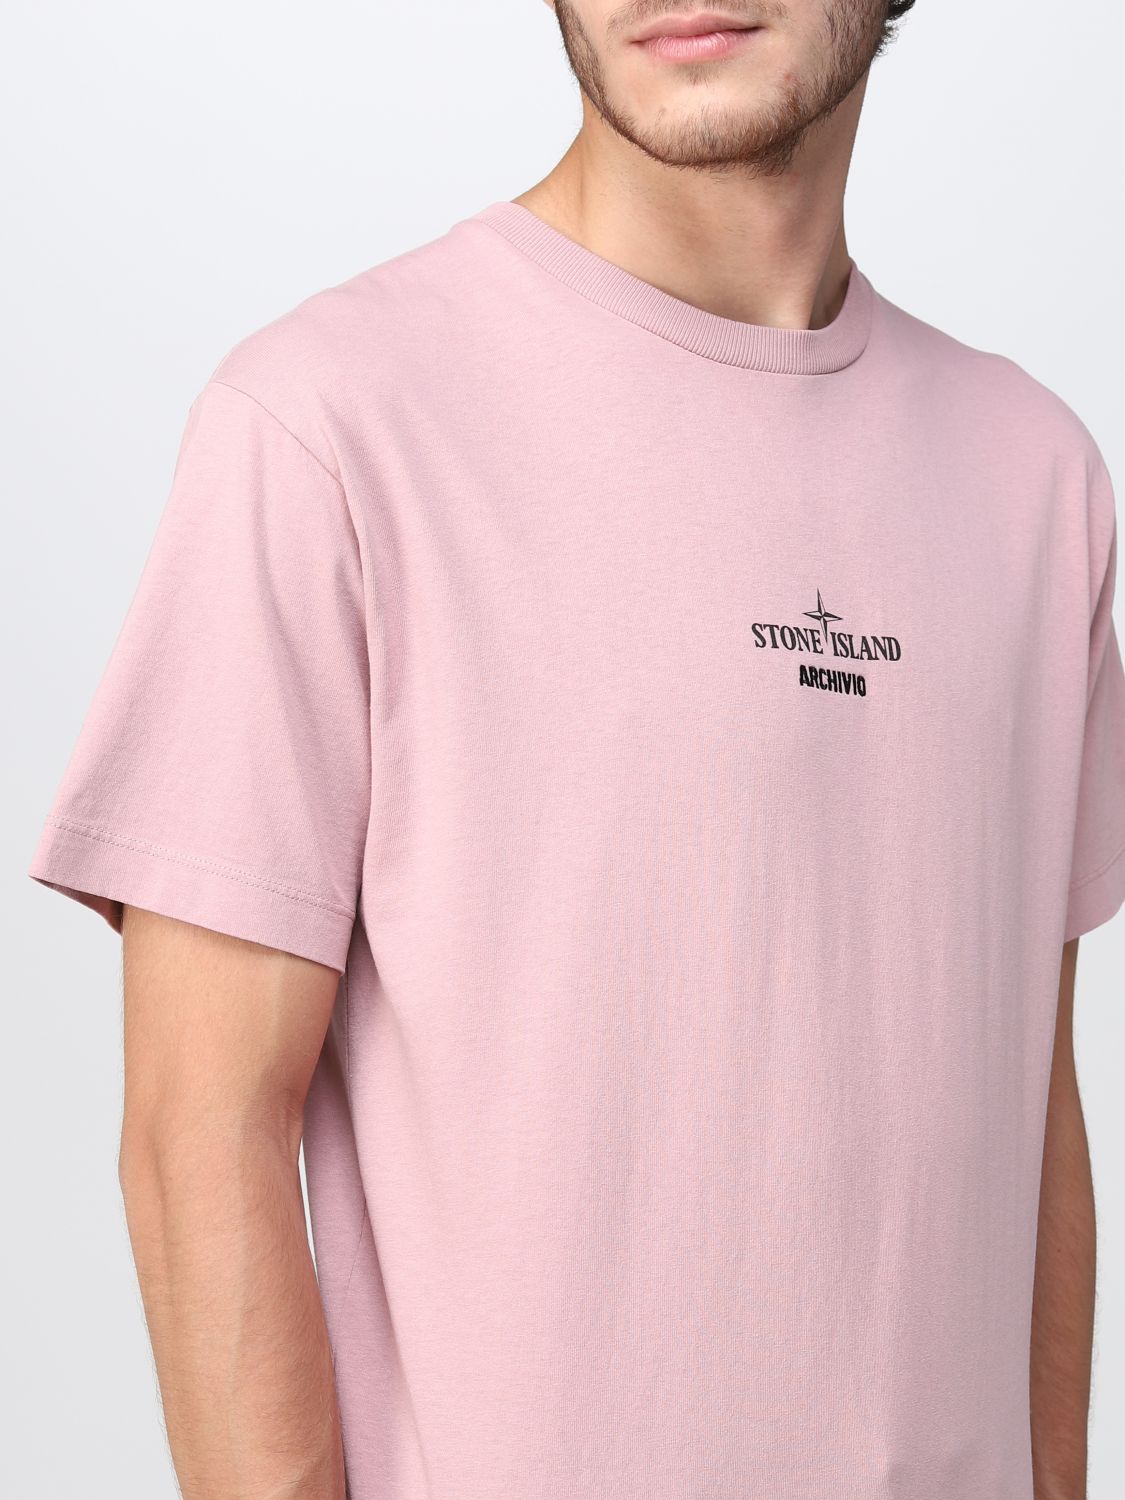 T-shirt Stone Island: Stone Island t-shirt for man pink 5